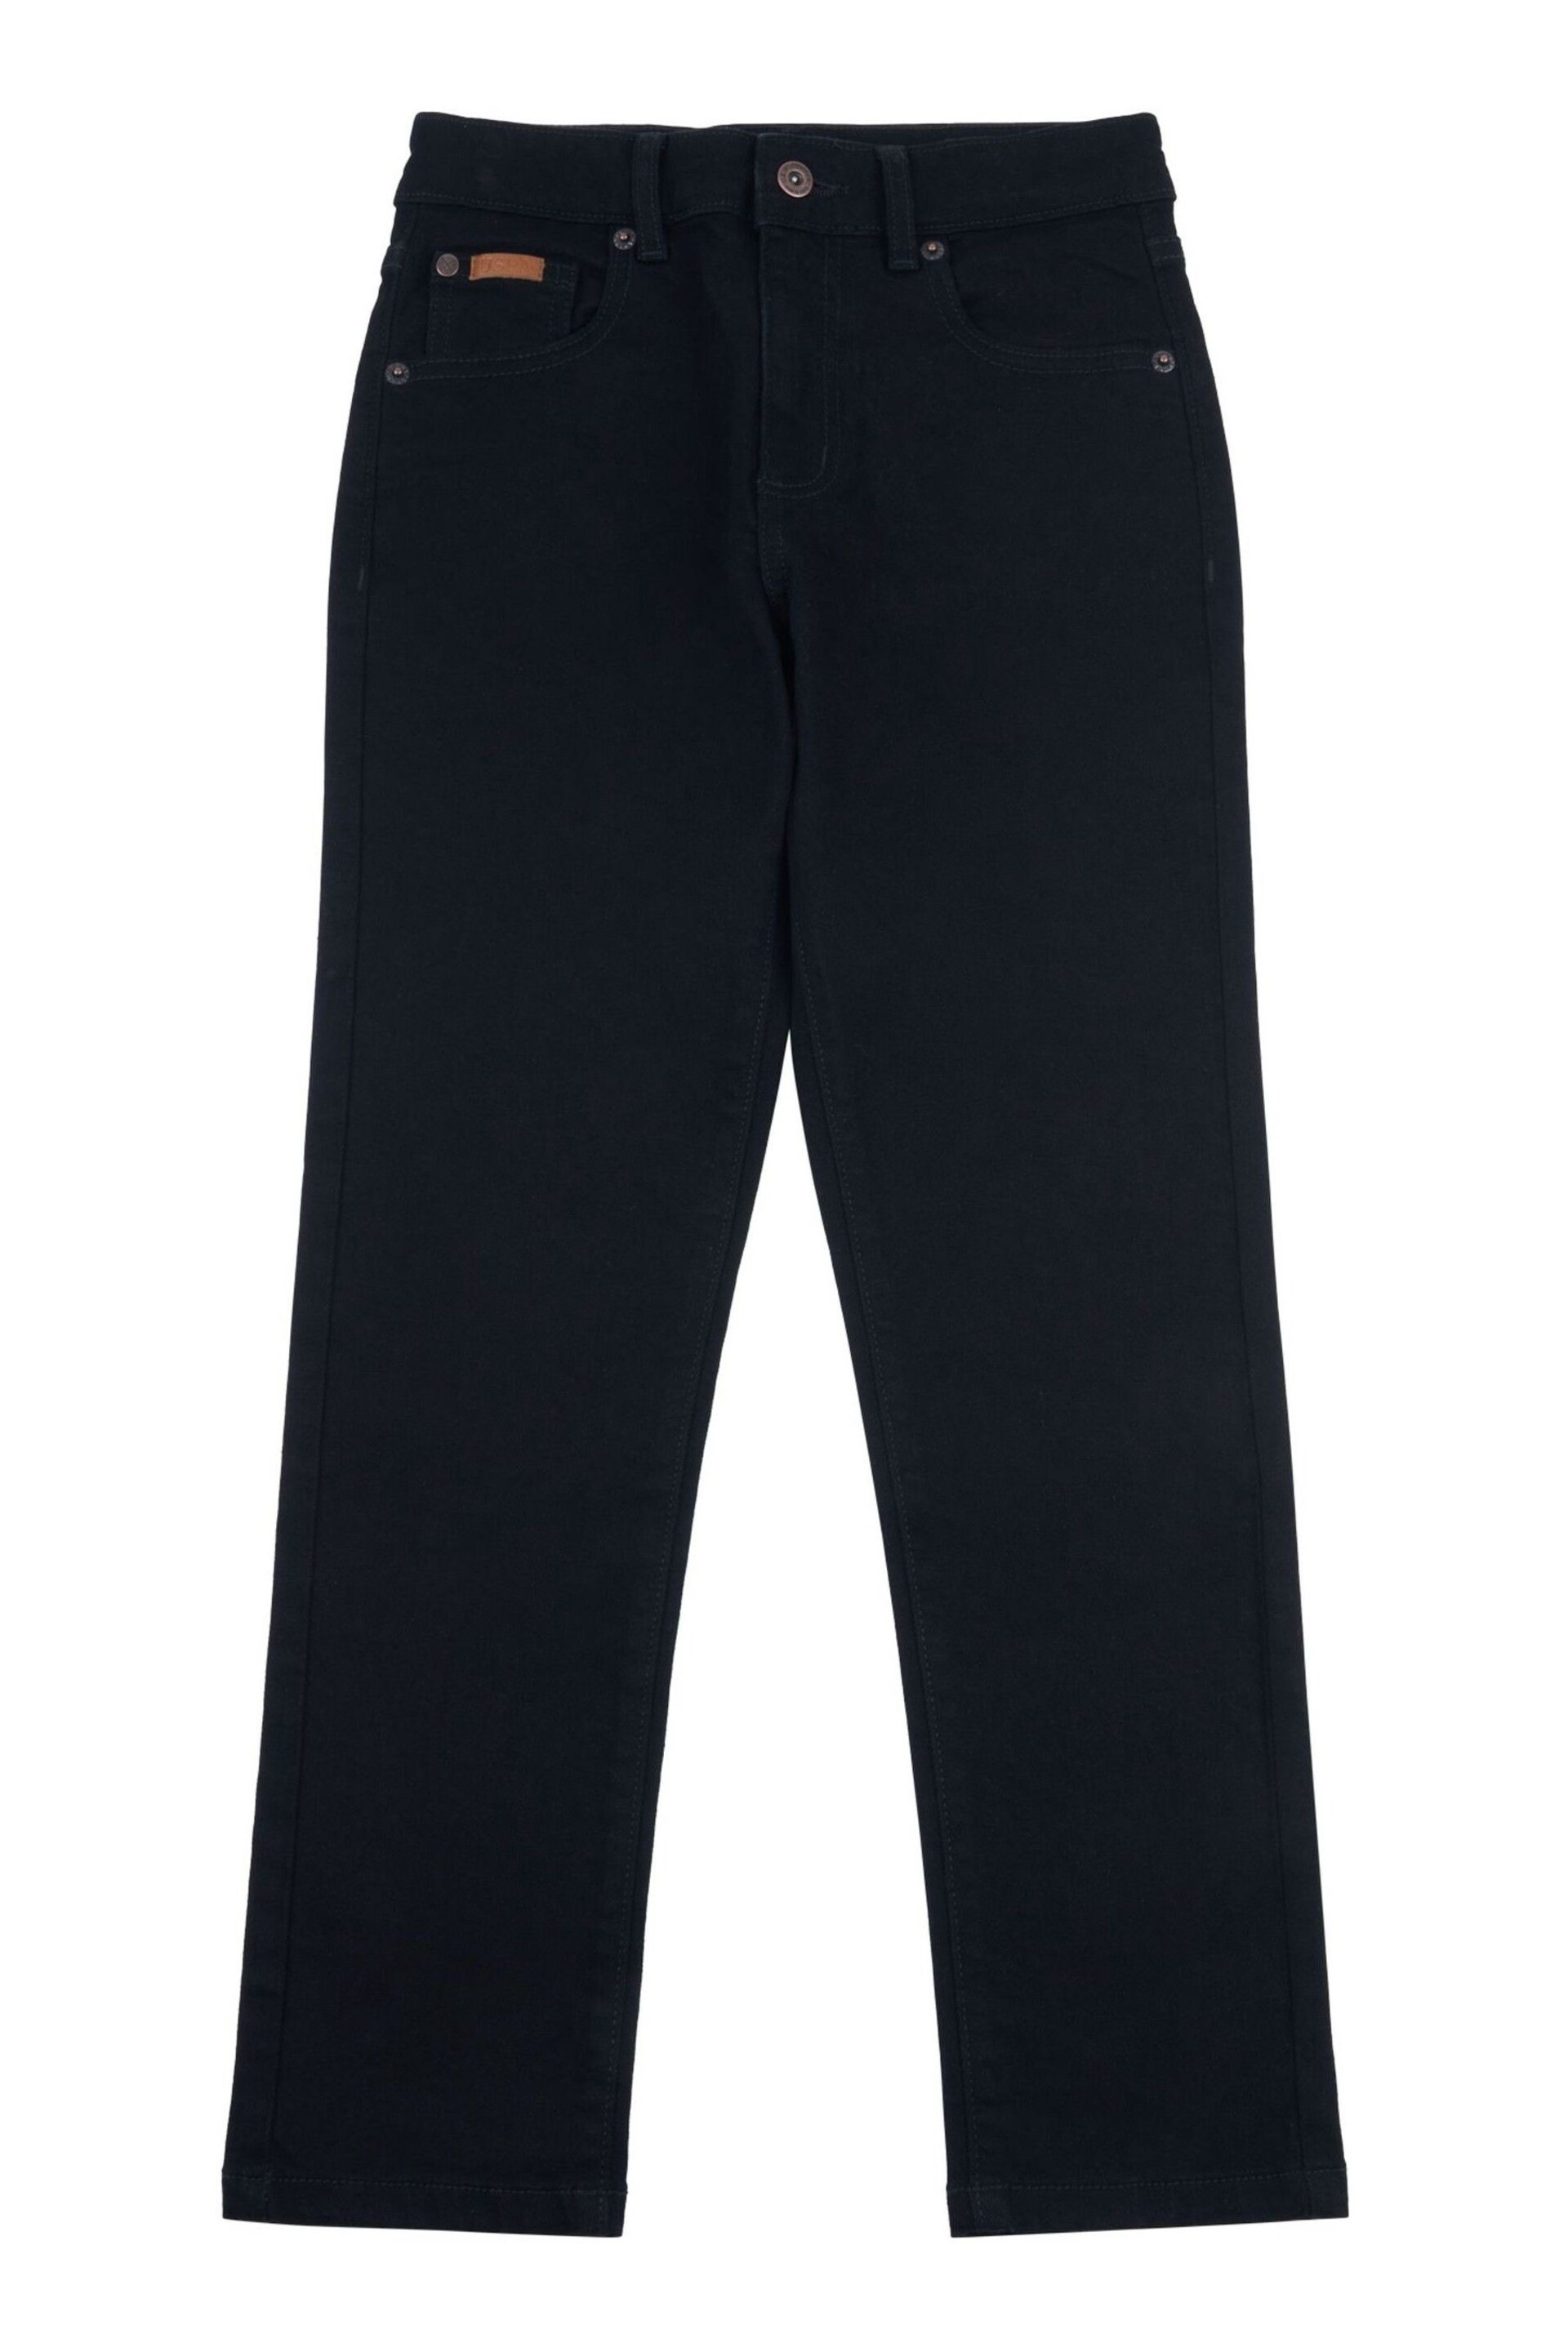 U.S. Polo Assn. Boys 5 Pocket Slim Fit Denim Black Jeans - Image 4 of 7